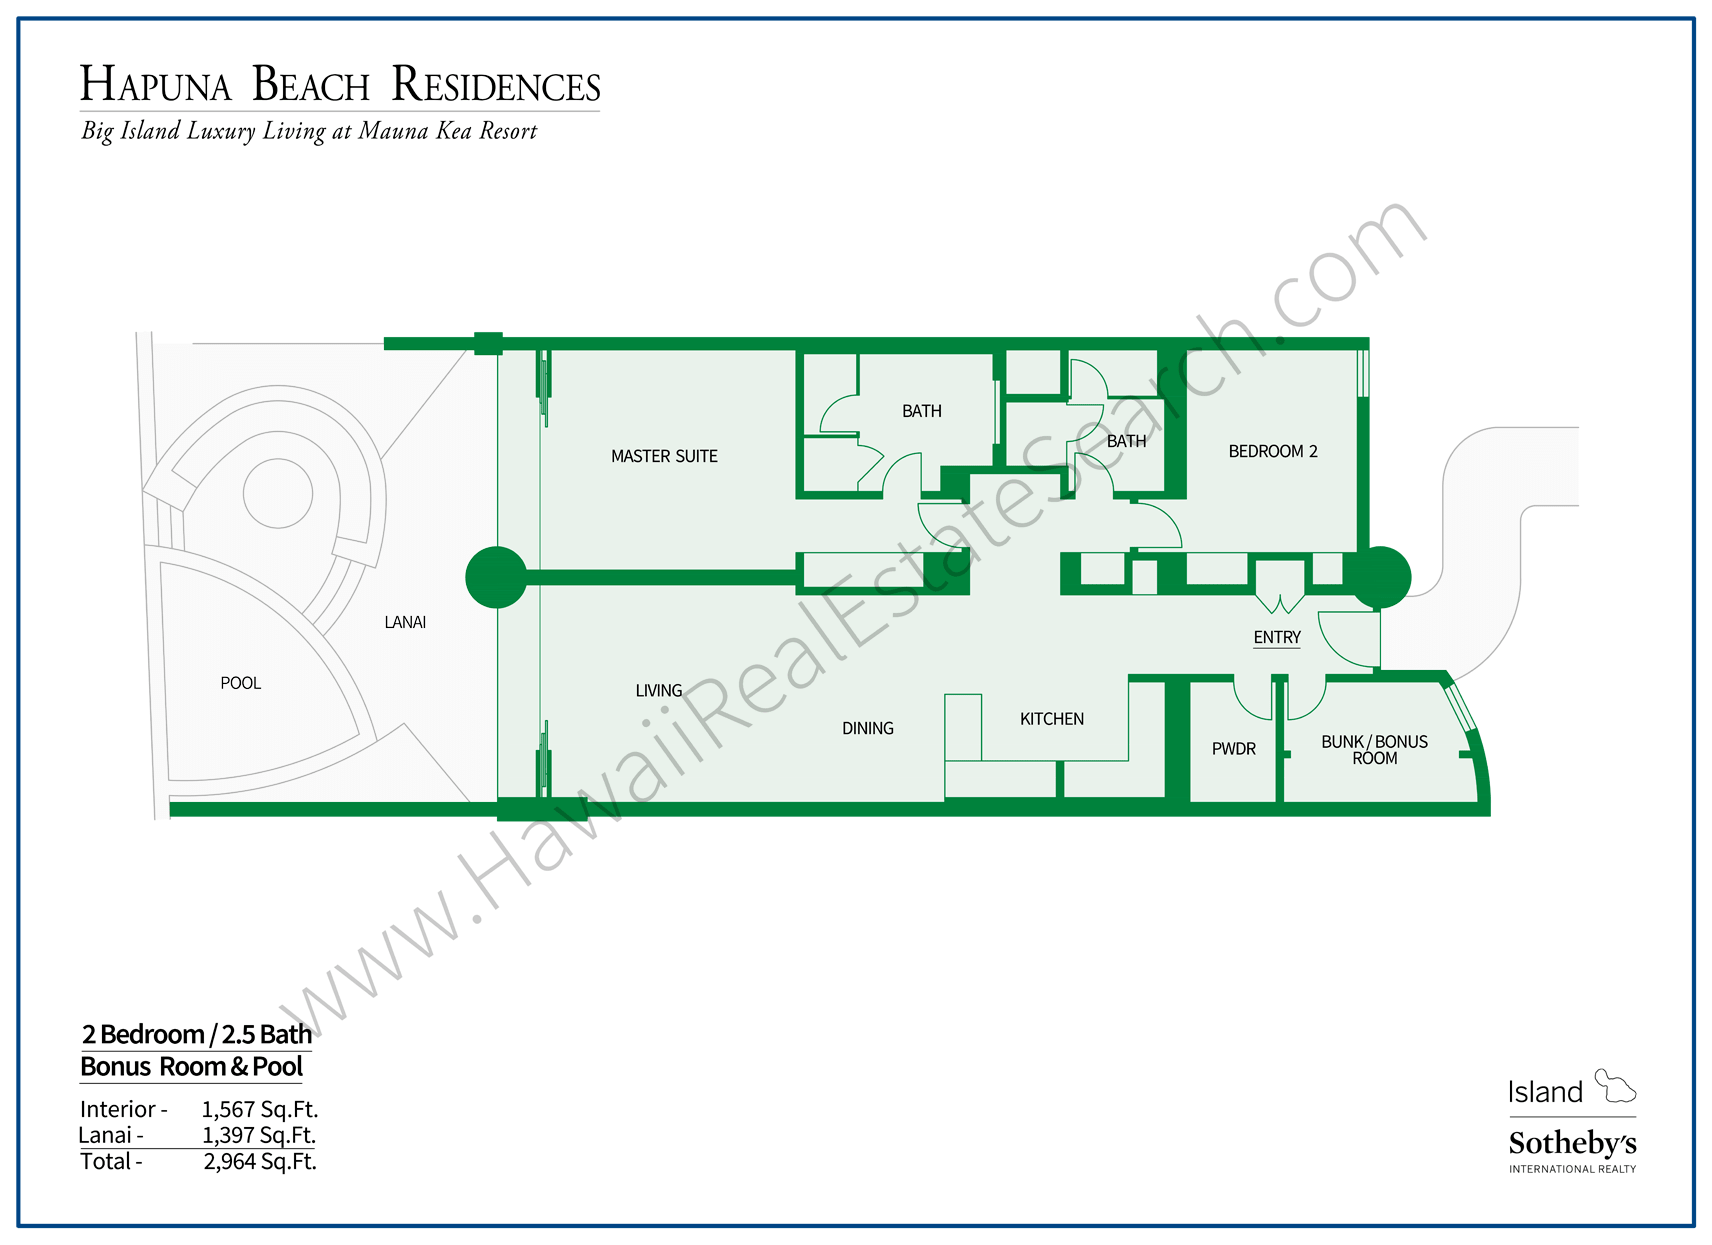 Hapuna Beach Residences 2 Bedroom Floor Plan